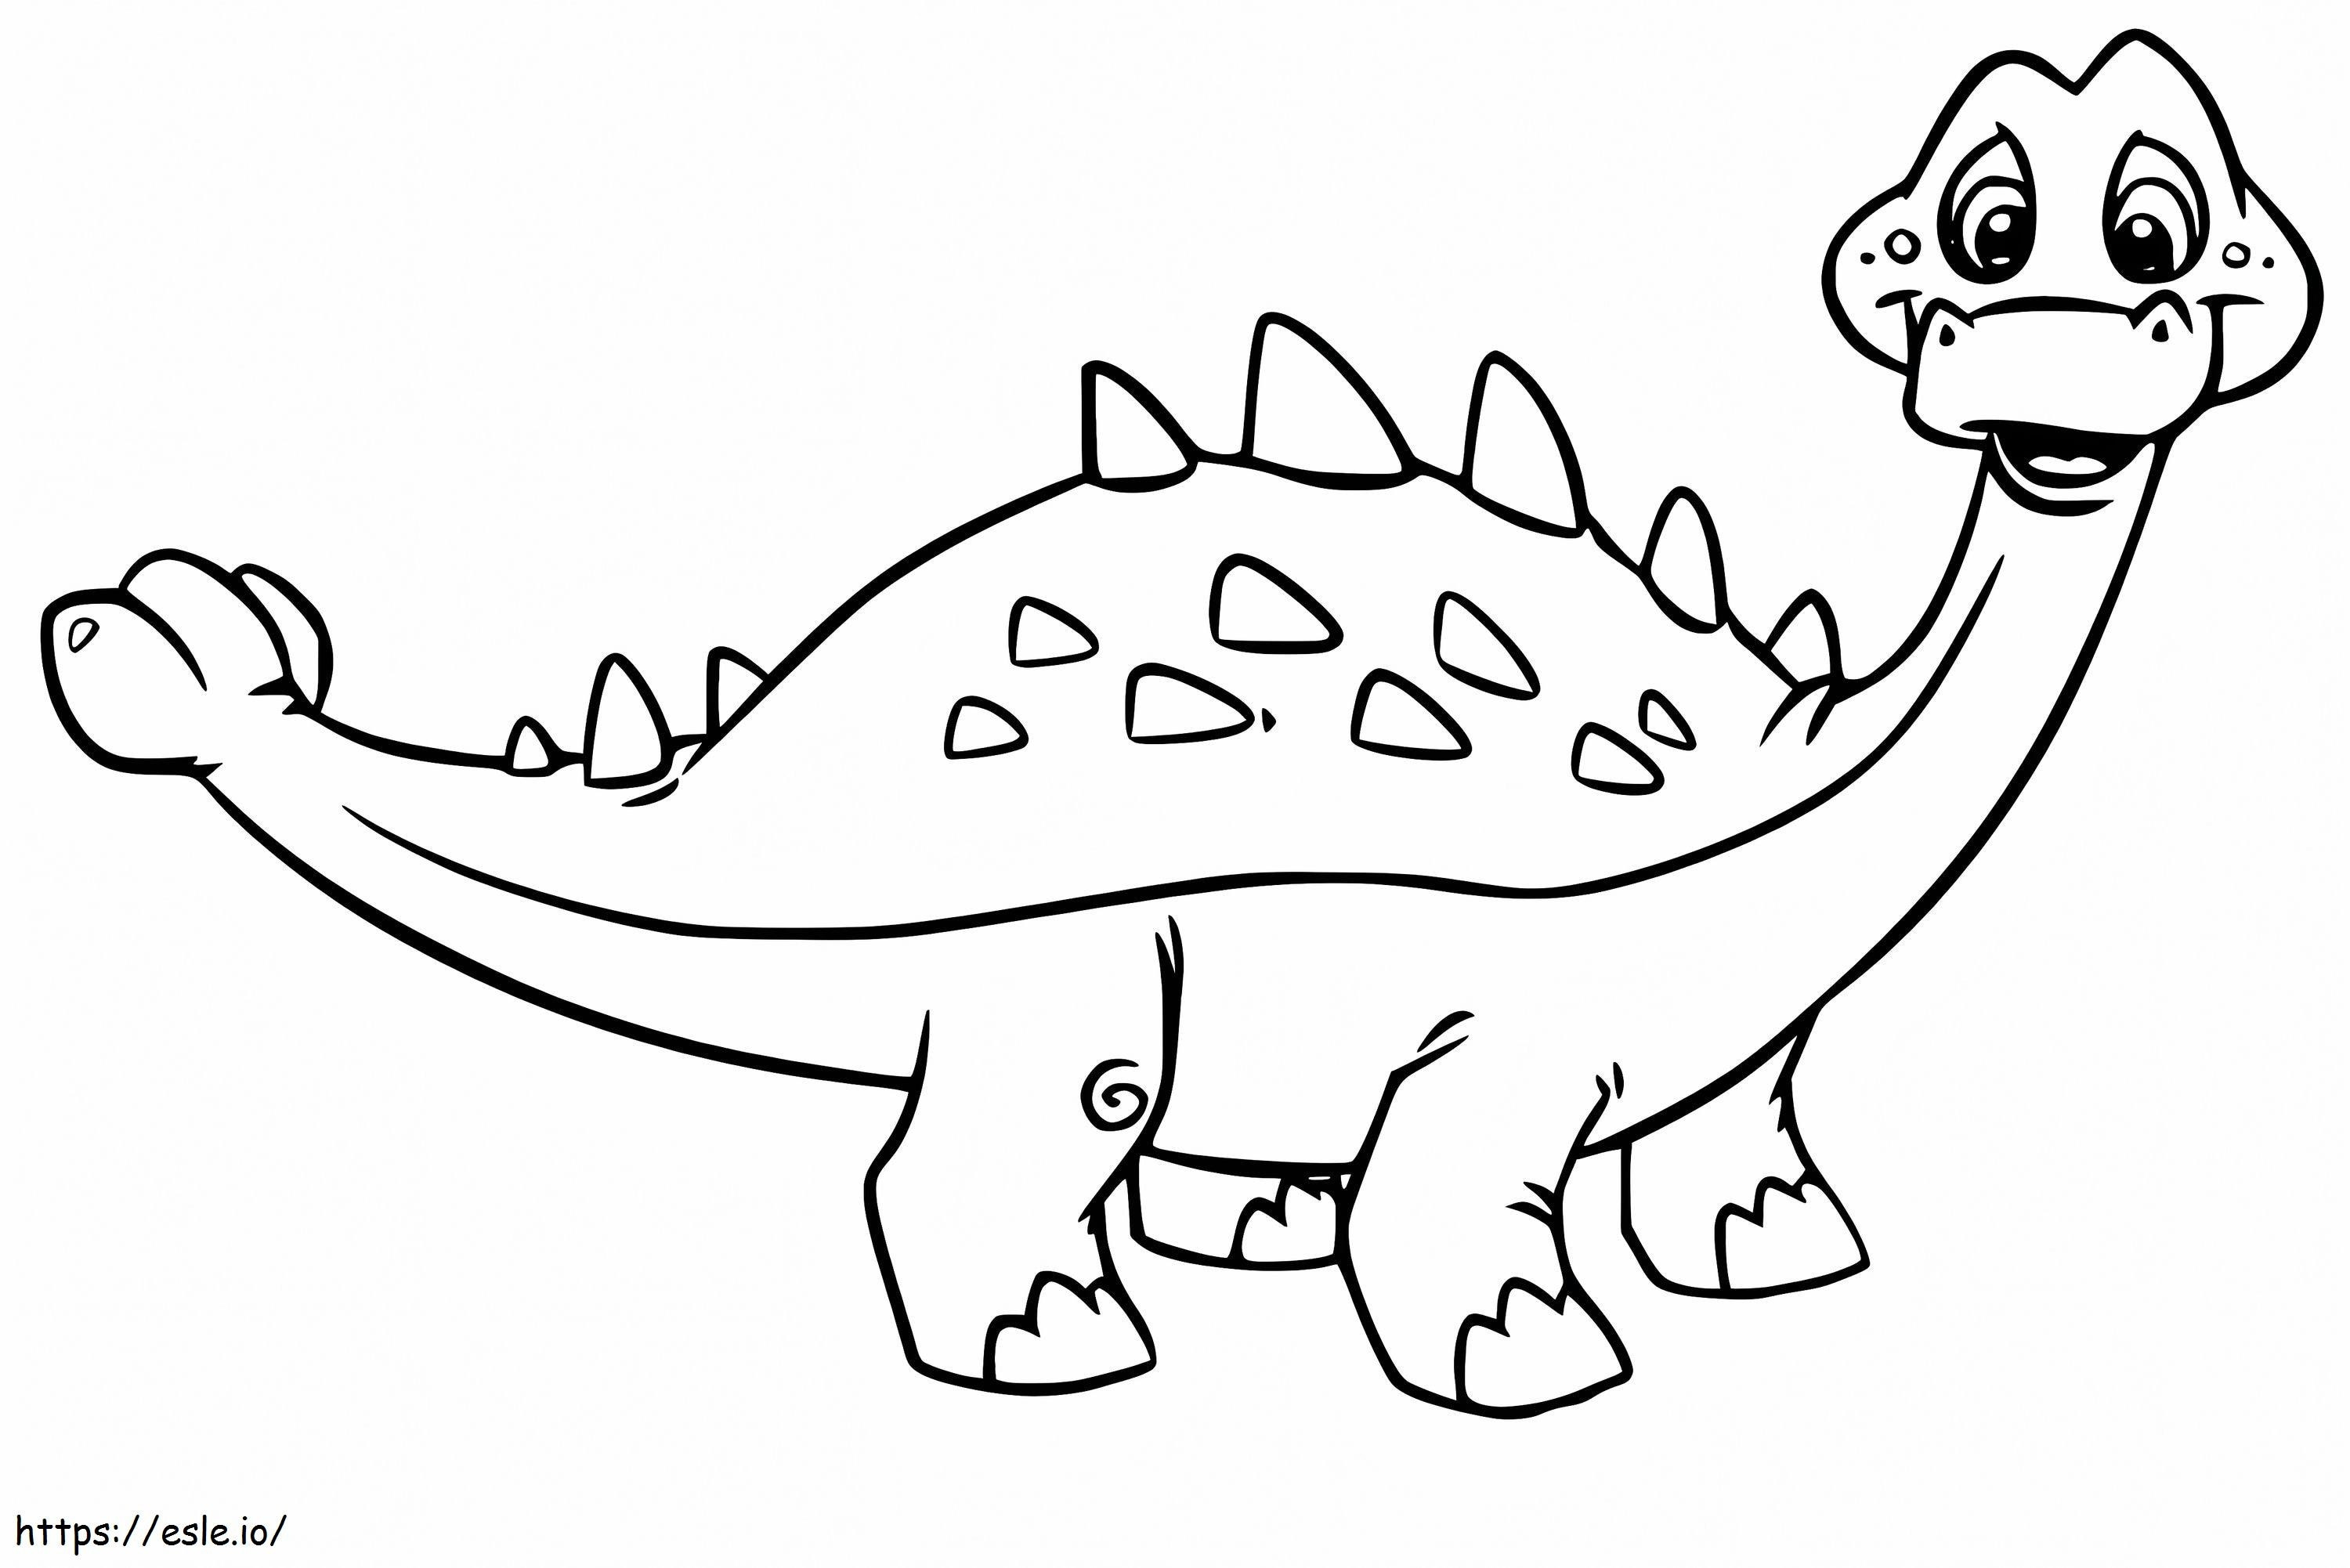 Cartoon Ankylosaurus coloring page